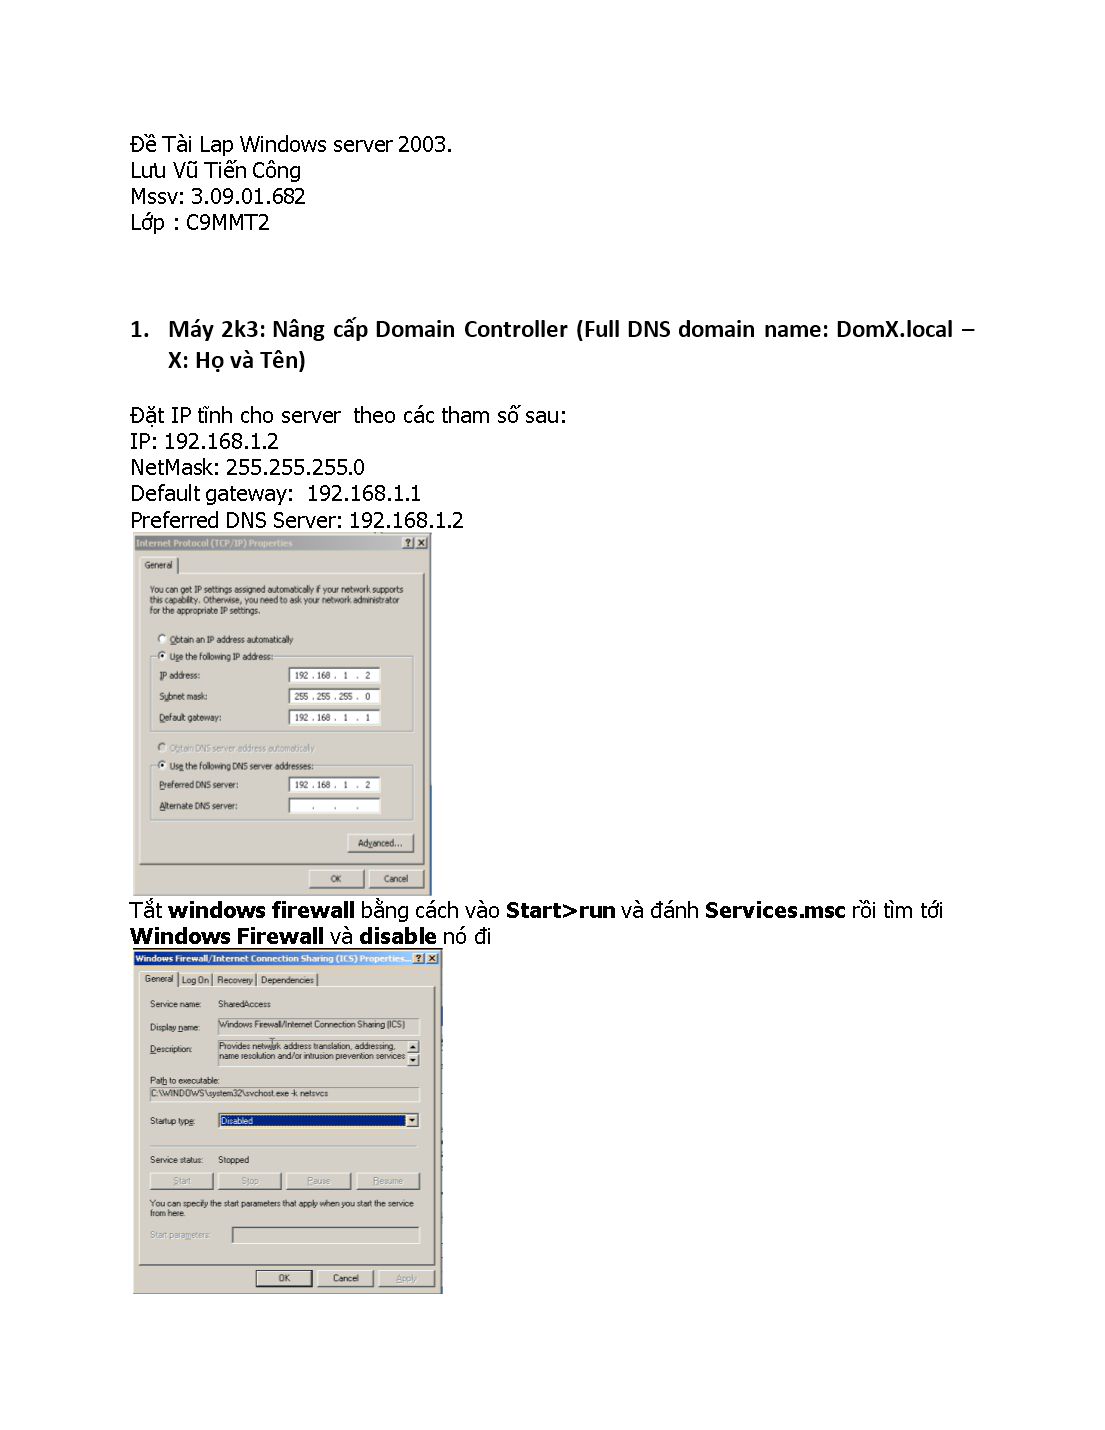 Đề tài Lap Windows server 2003 trang 1